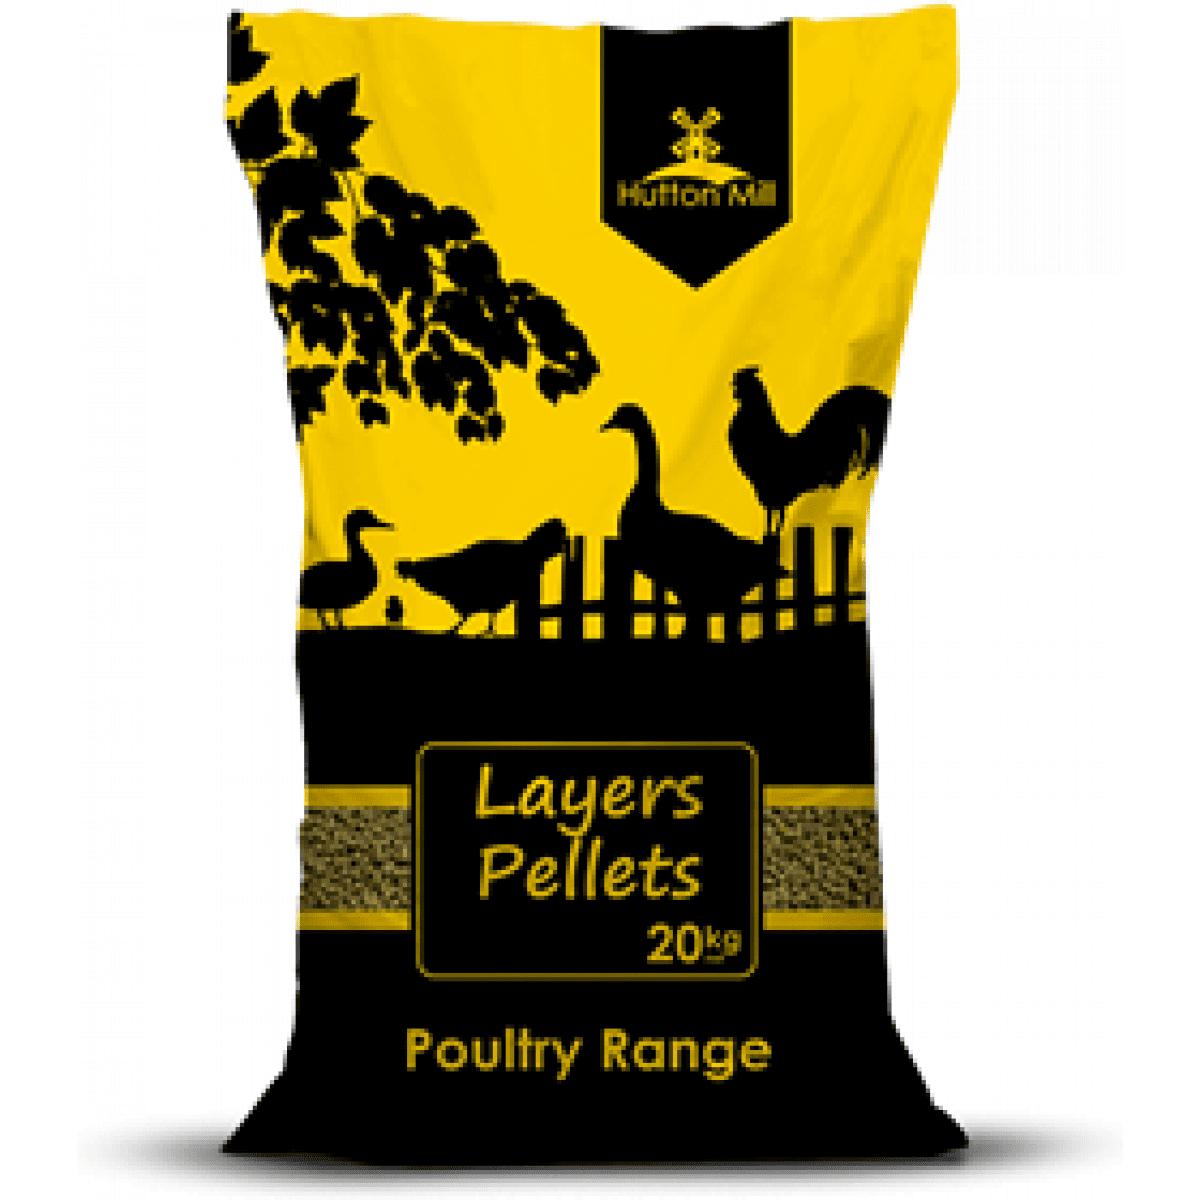 Hutton Mill Layers Pellets 20kg – Pawfect Supplies Ltd Product Image